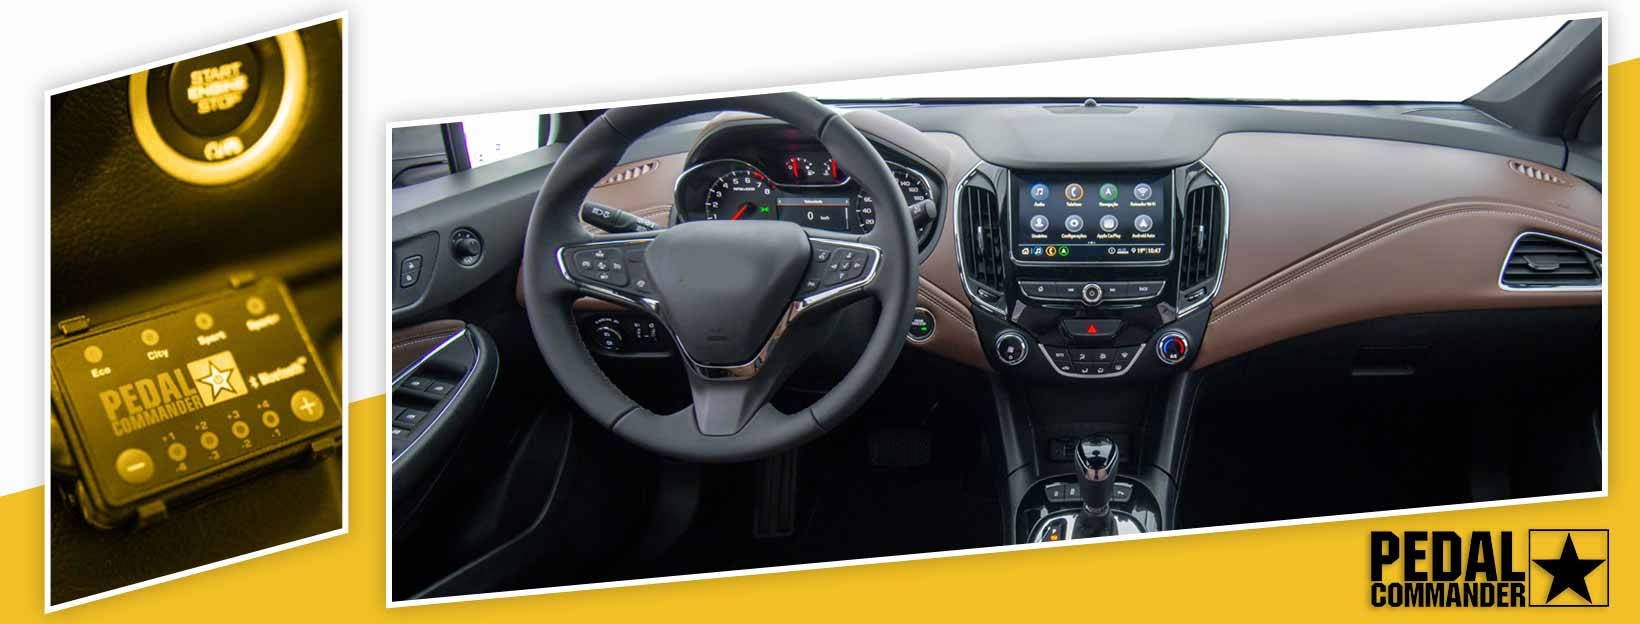 Pedal Commander for Chevrolet Cruze - interior